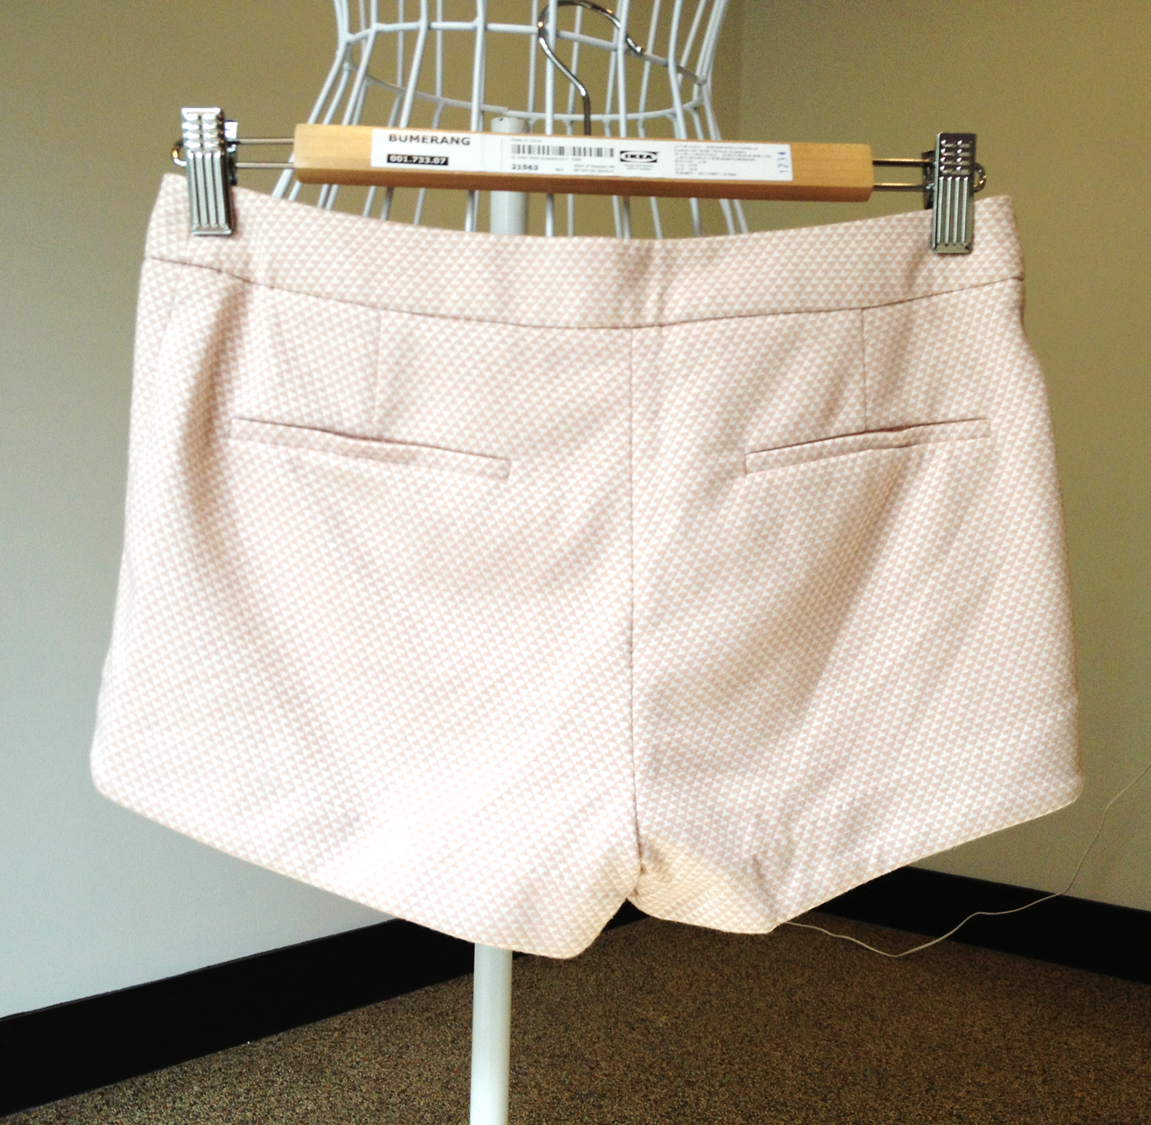 FashionnFeverr: Pastel Shorts RM40